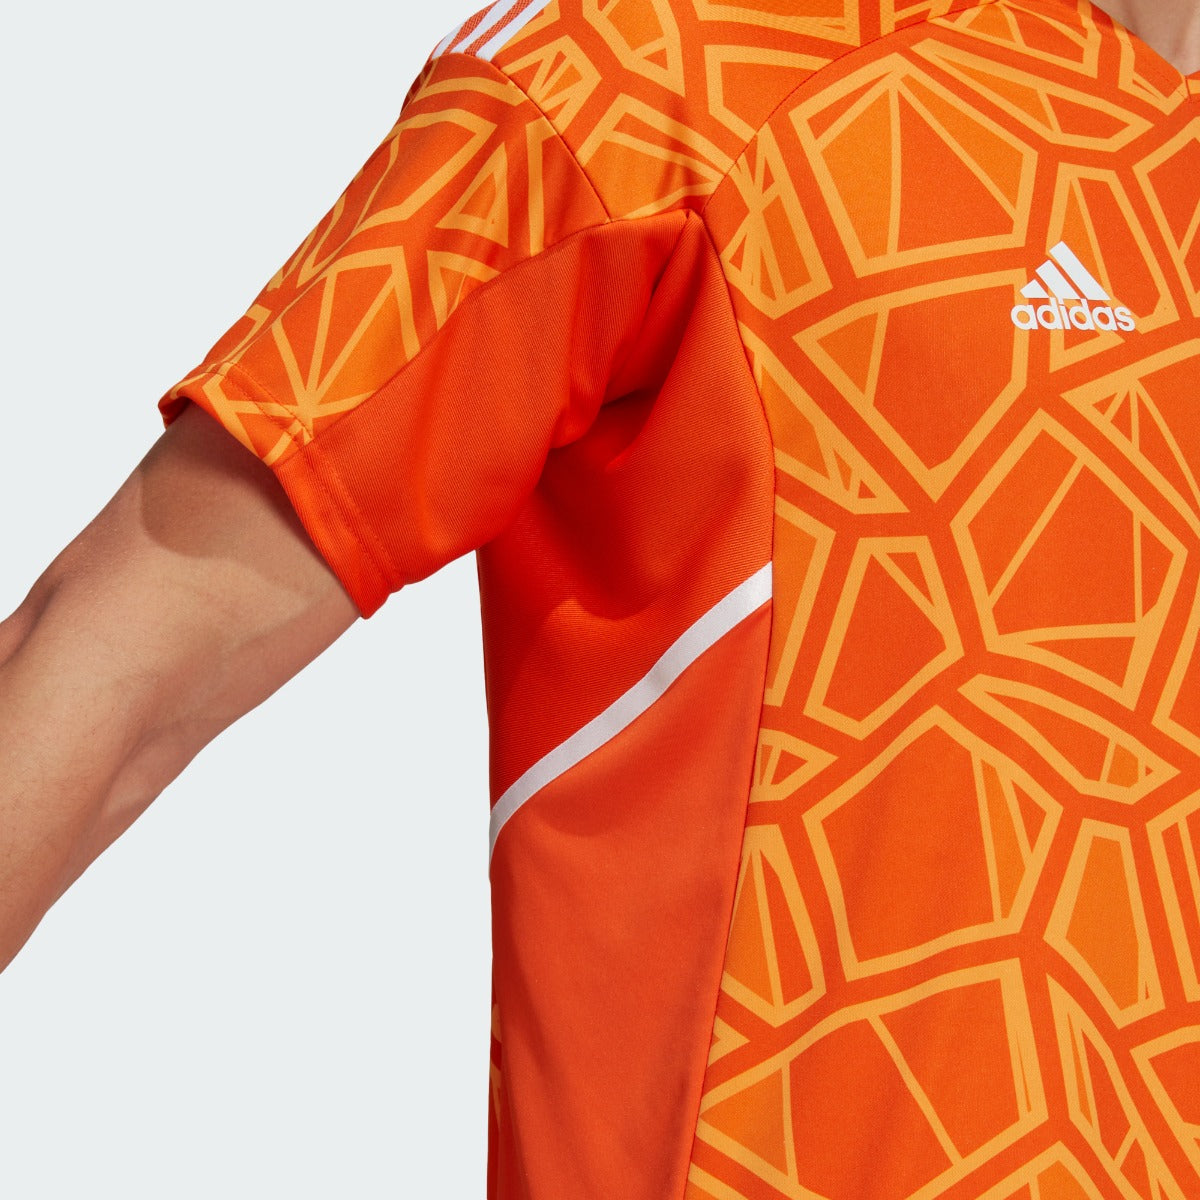 adidas Entrada 14 Jersey Short Sleeve T-Shirt Orange